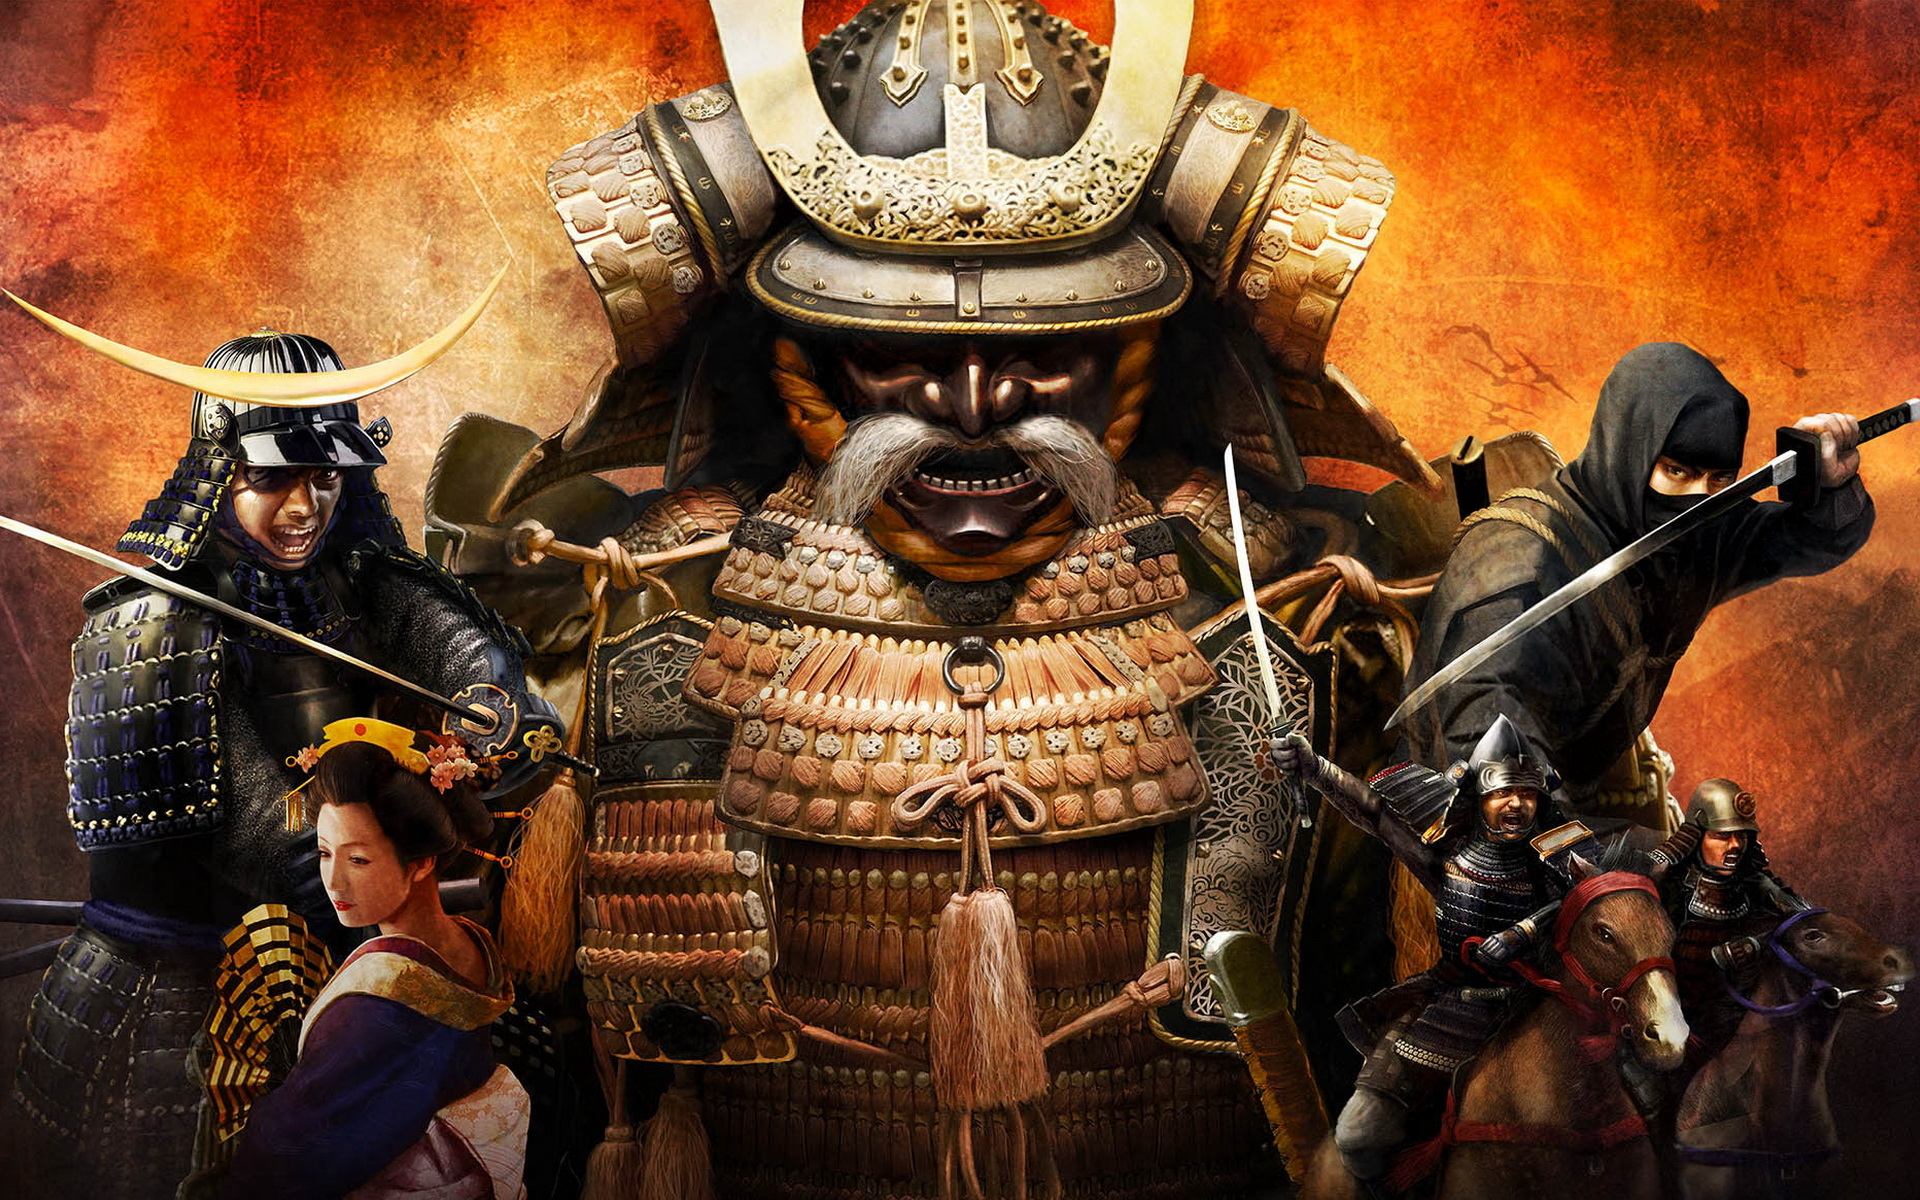 Wallpapers samurai japan war on the desktop